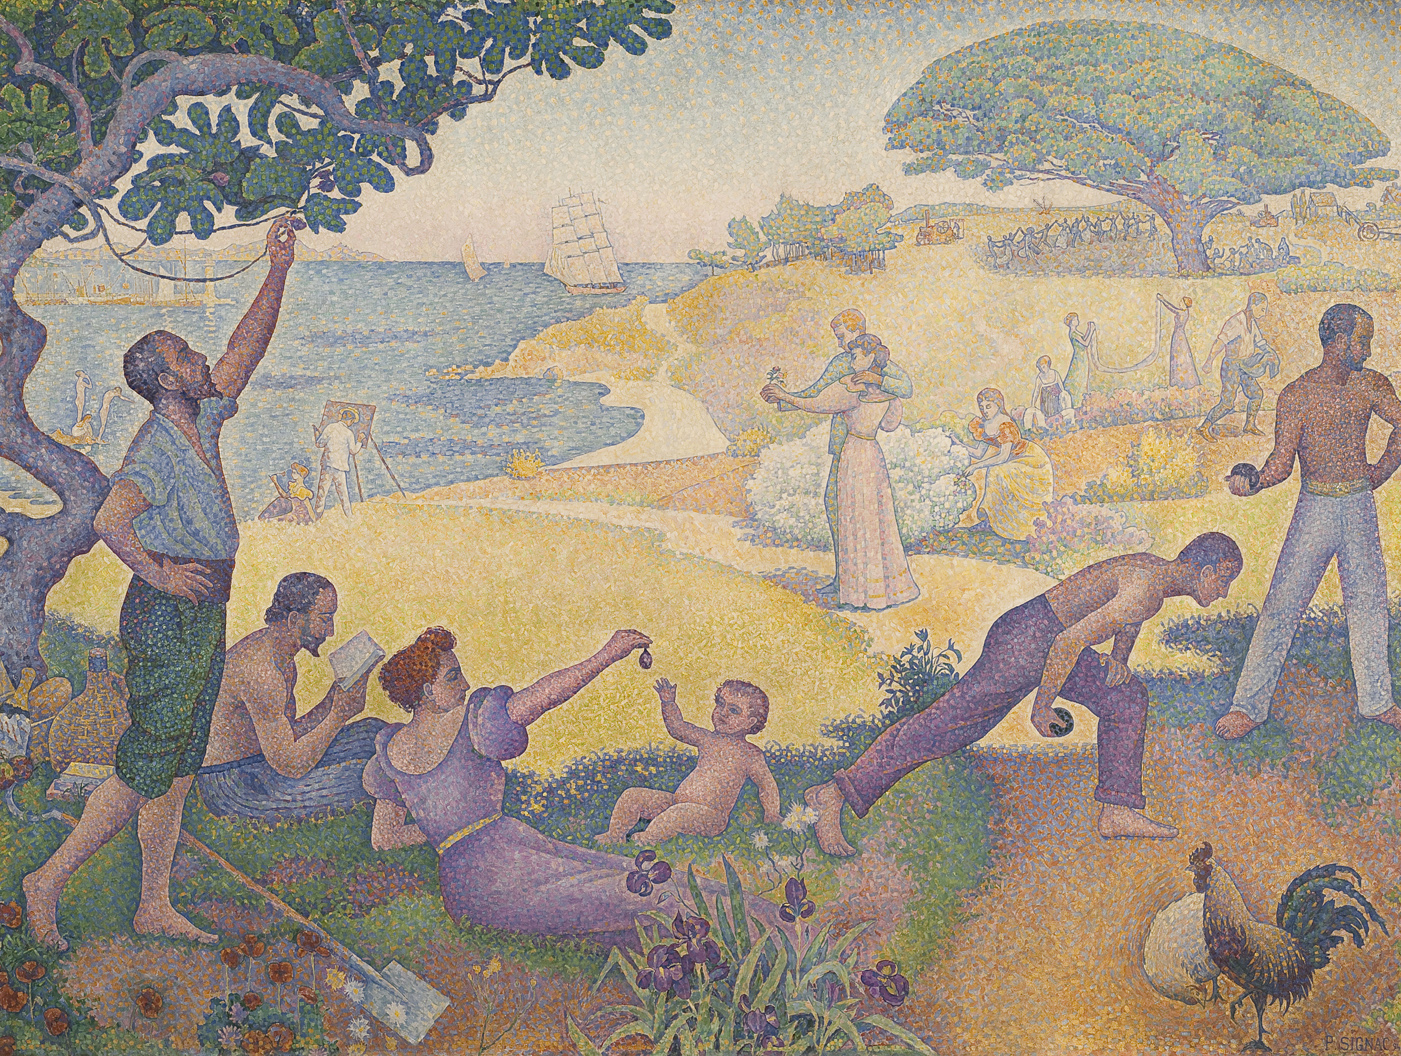 Paul Signac, In the Time of Harmony, 1893-95, oil on canvas, 297 x 396 cm (Hôtel de Ville, Montreuil, France)